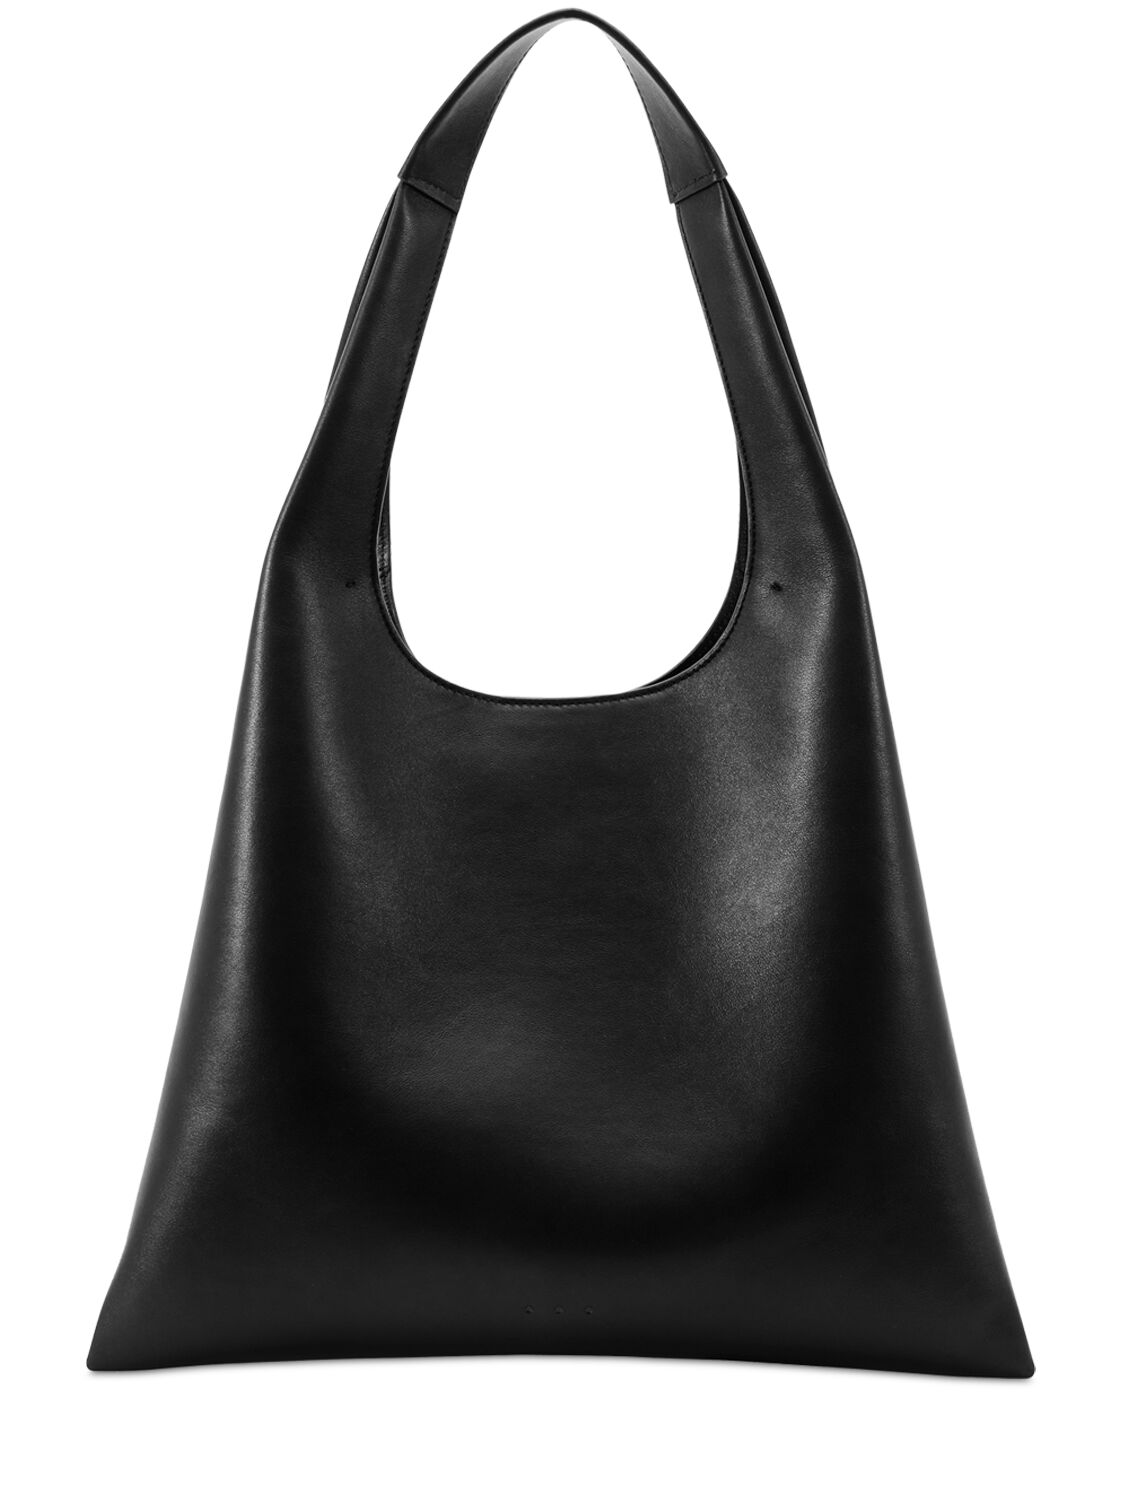 Image of Midi Shopper Smooth Leather Bag